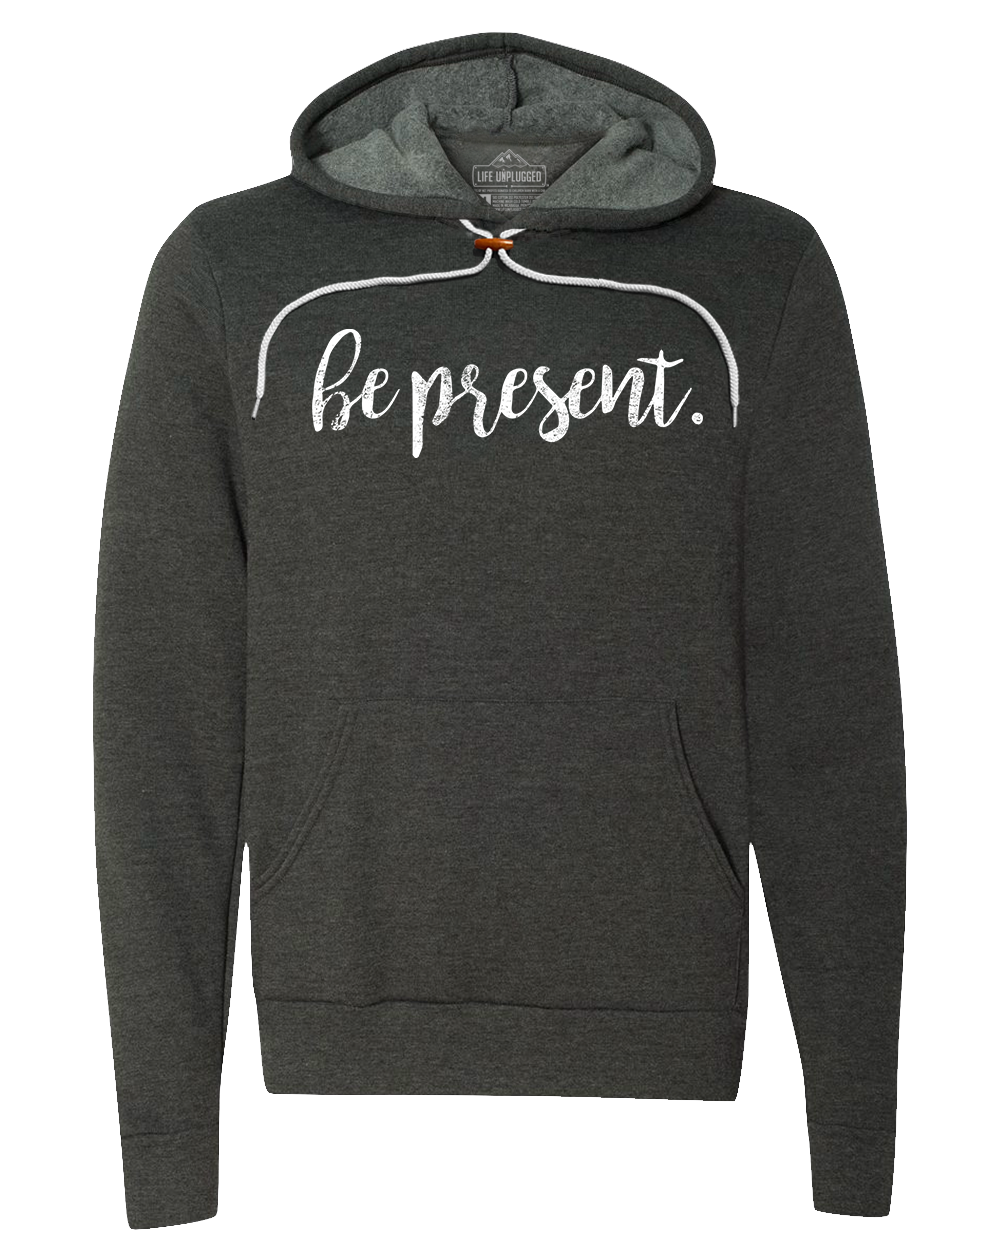 Be Present Cursive Premium Super Soft Hooded Sweatshirt